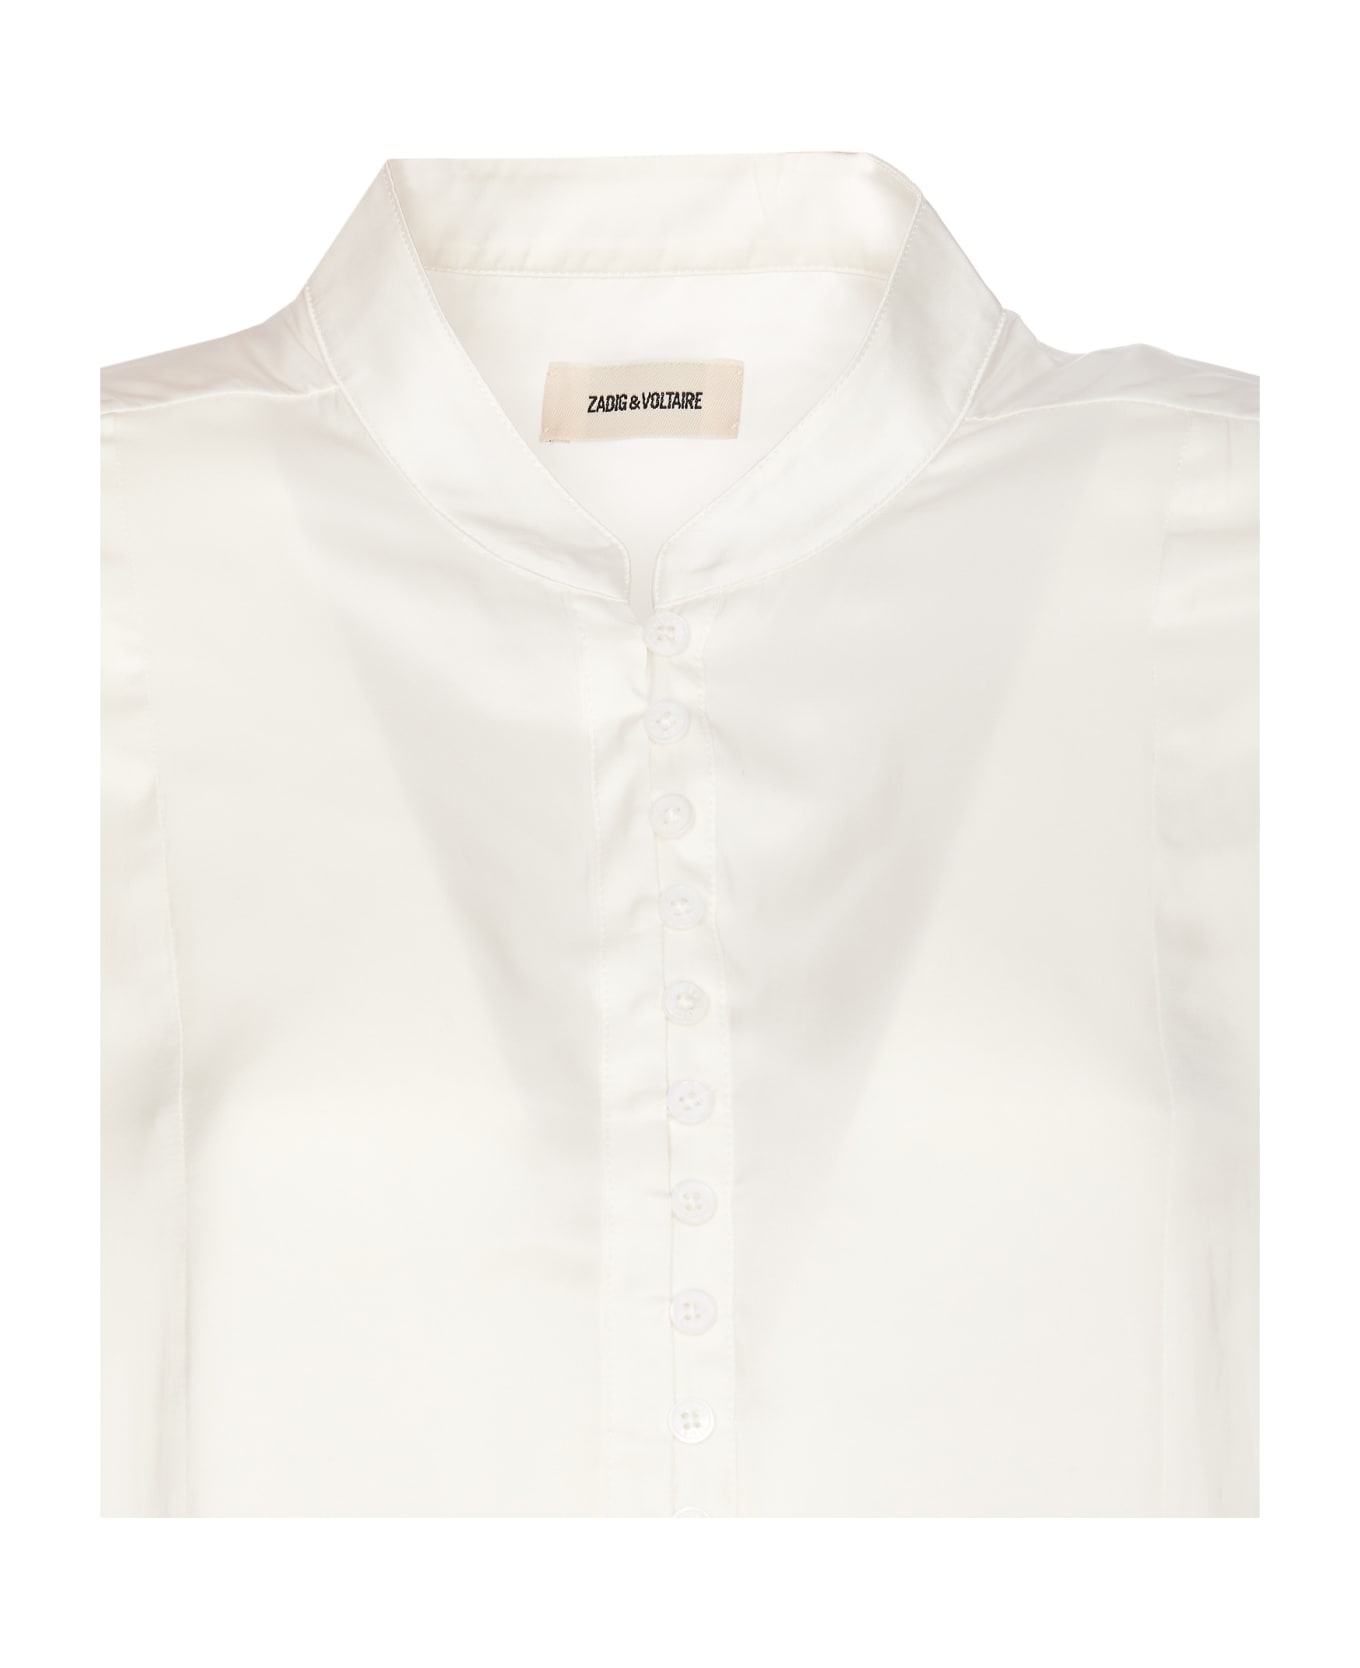 Zadig & Voltaire Twina Satin Shirt - White ブラウス